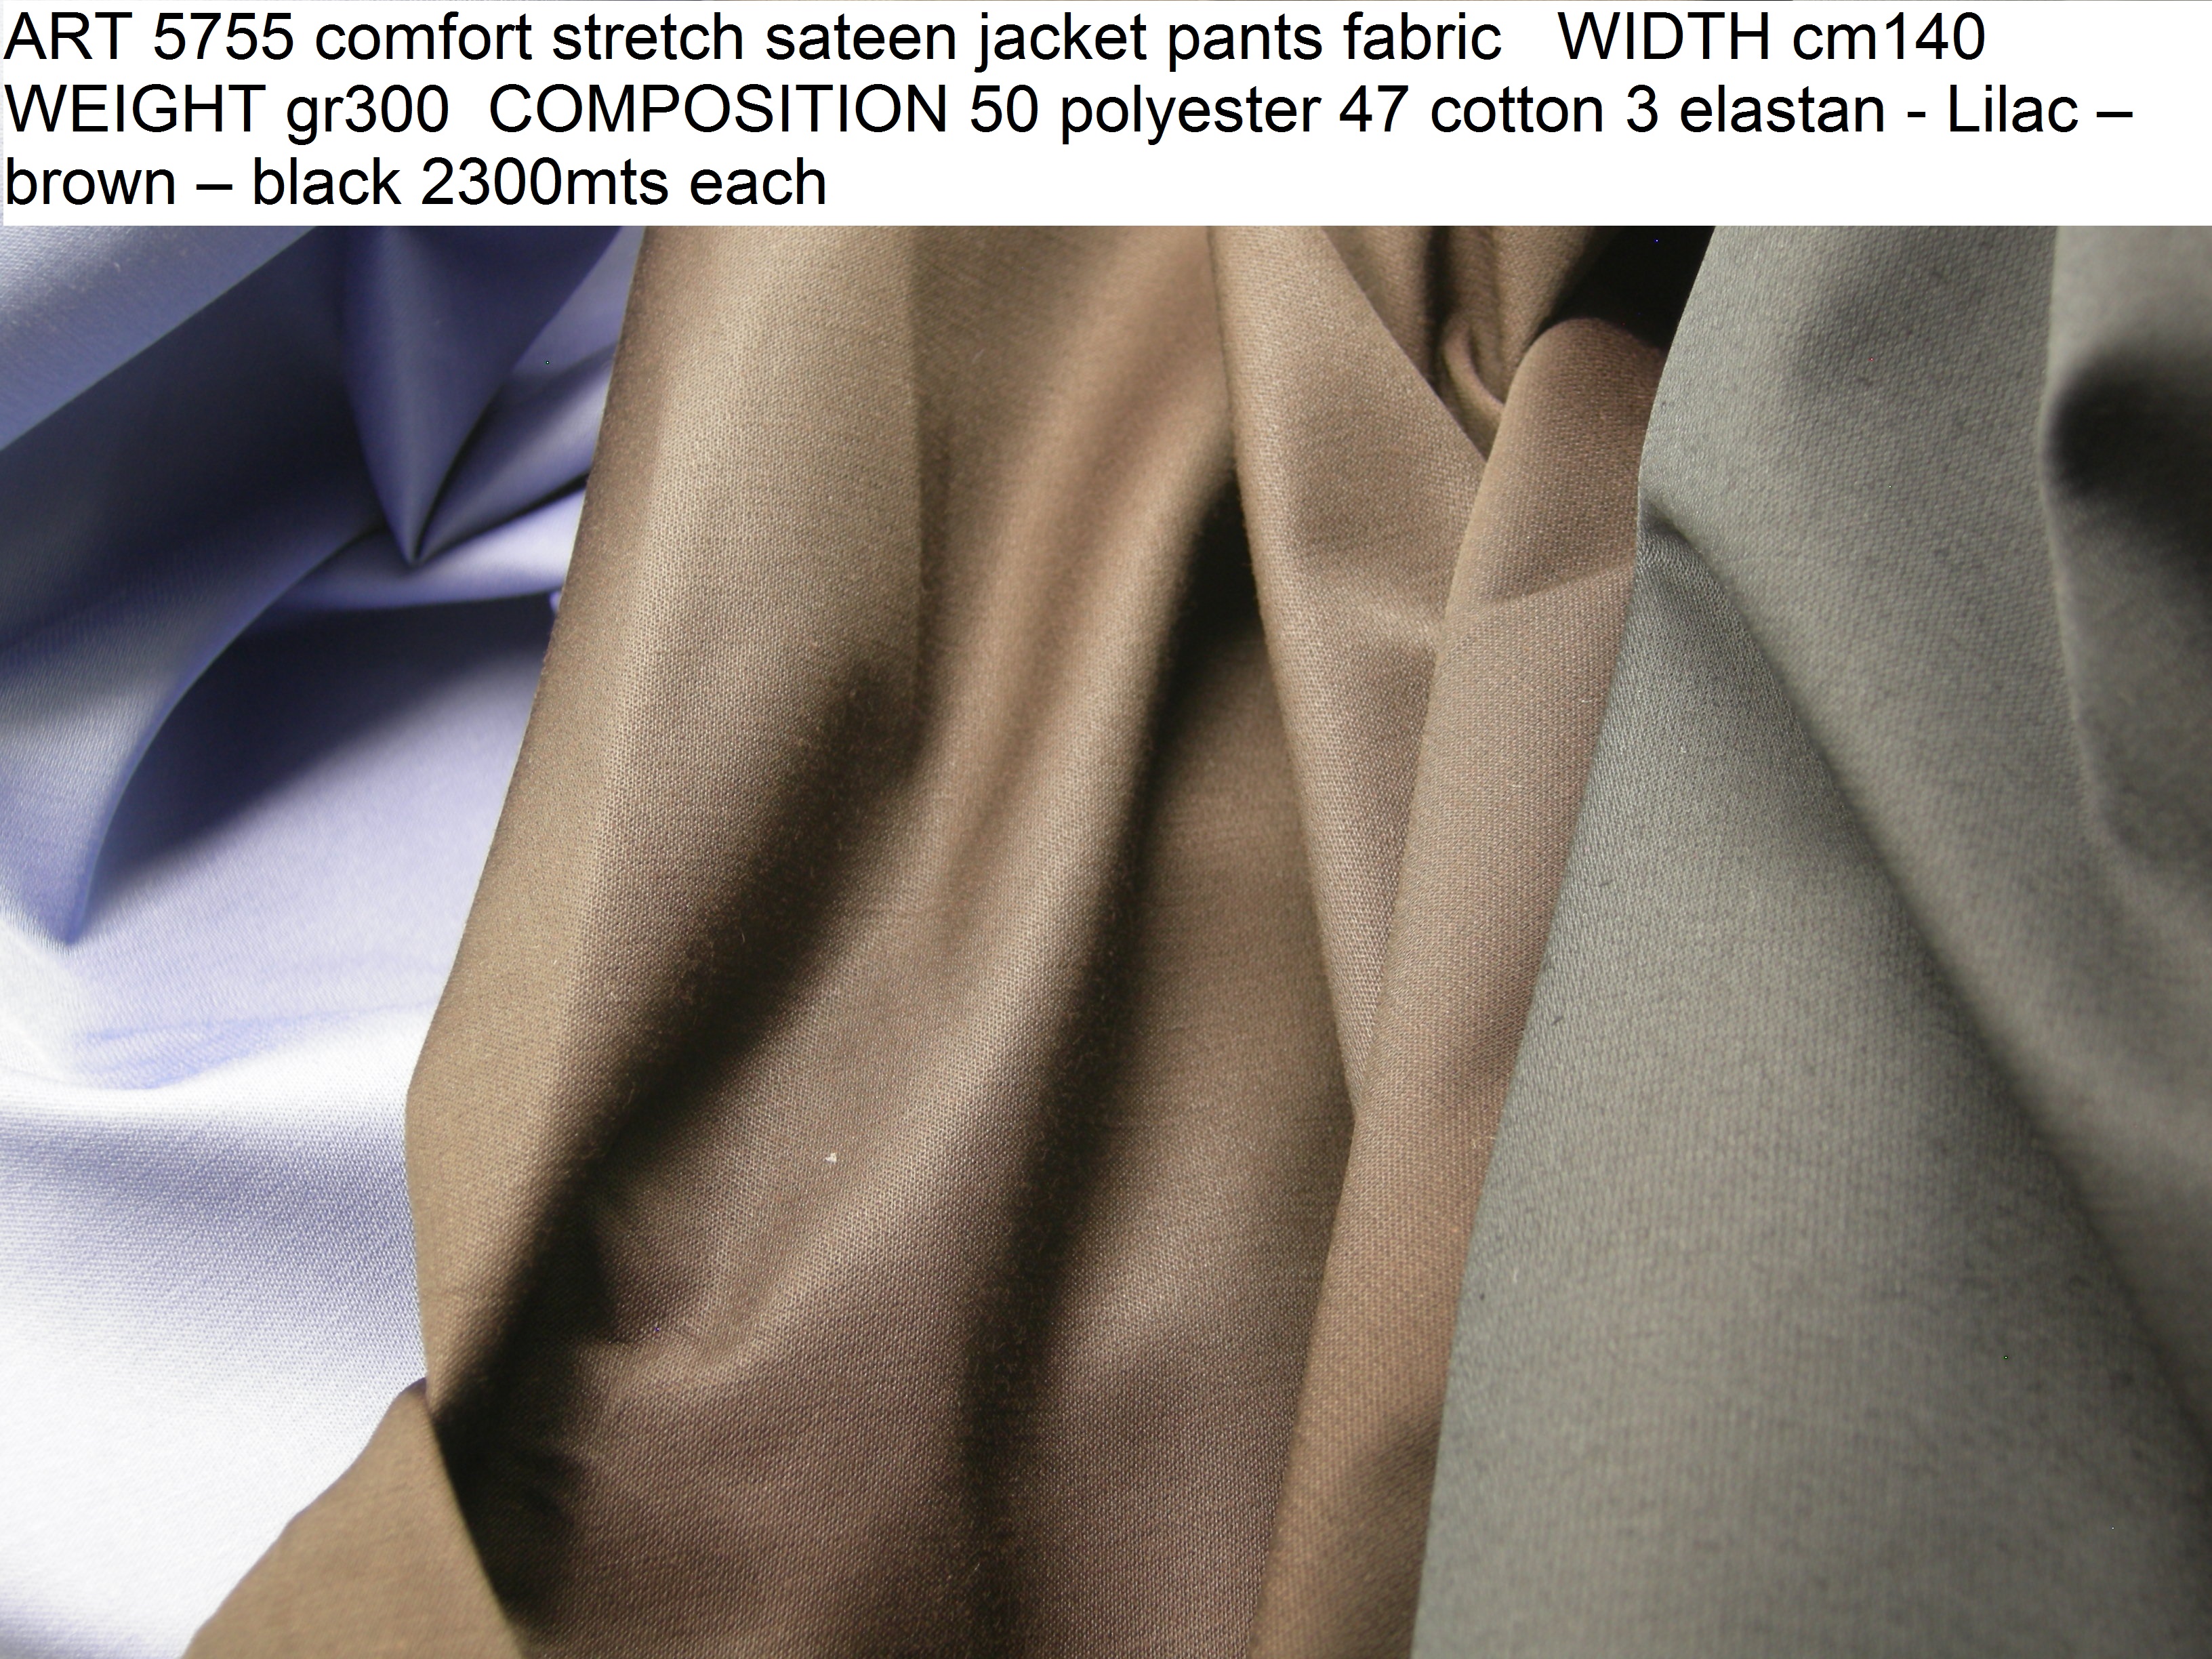 ART 5755 comfort stretch sateen jacket pants fabric WIDTH cm140 WEIGHT gr300 COMPOSITION 50 polyester 47 cotton 3 elastan - Lilac – brown – black 2300mts each